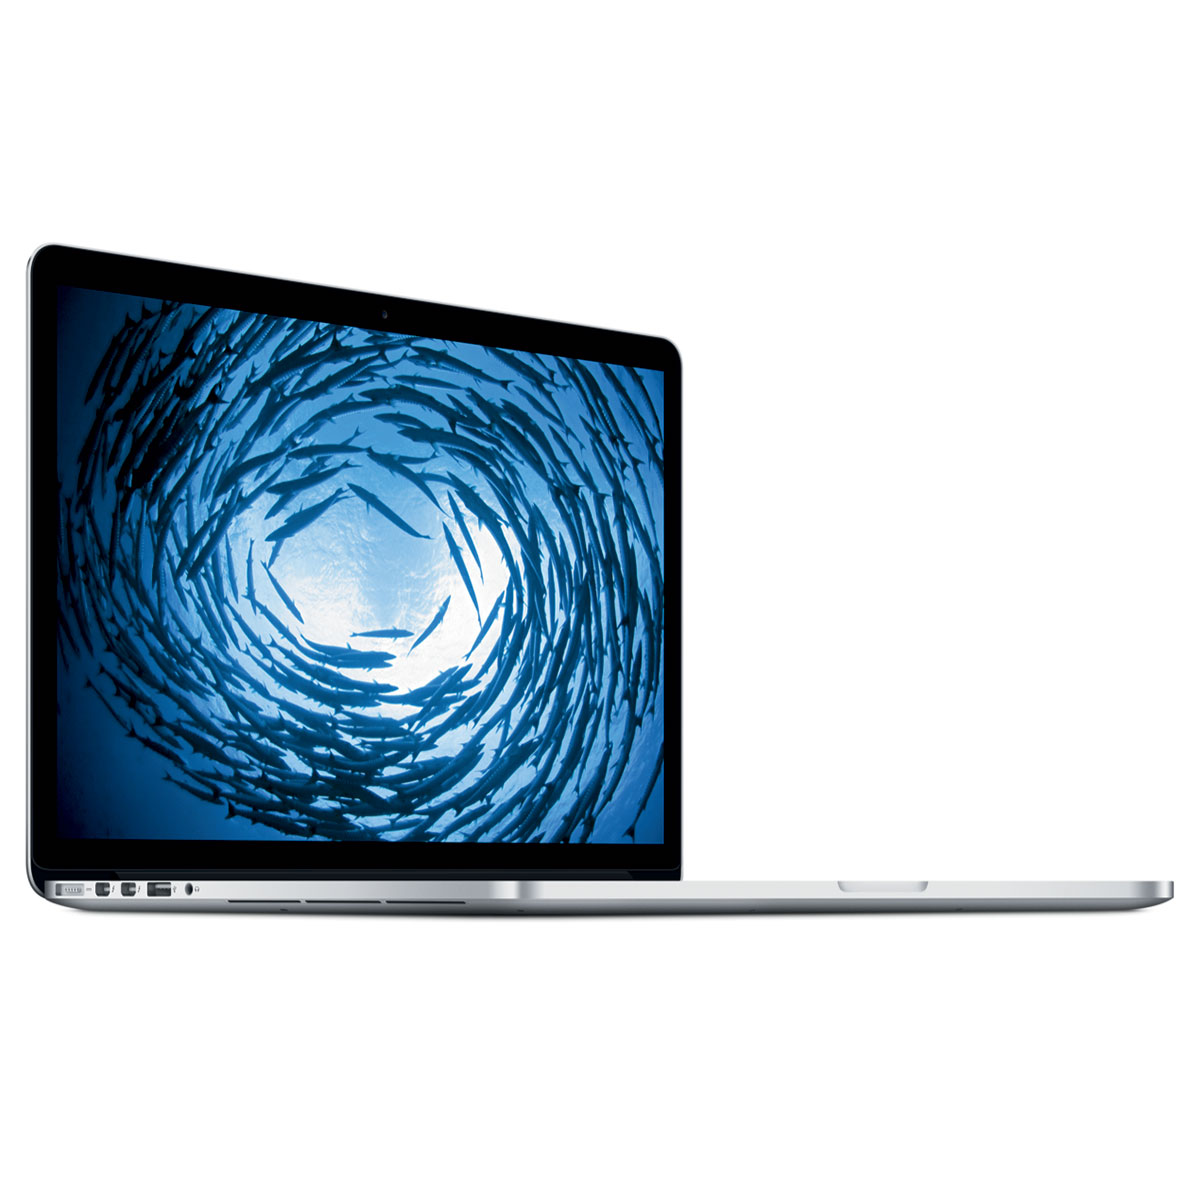 How to install Mac OS X 1010 Yosemite on Intel PC - YouTube